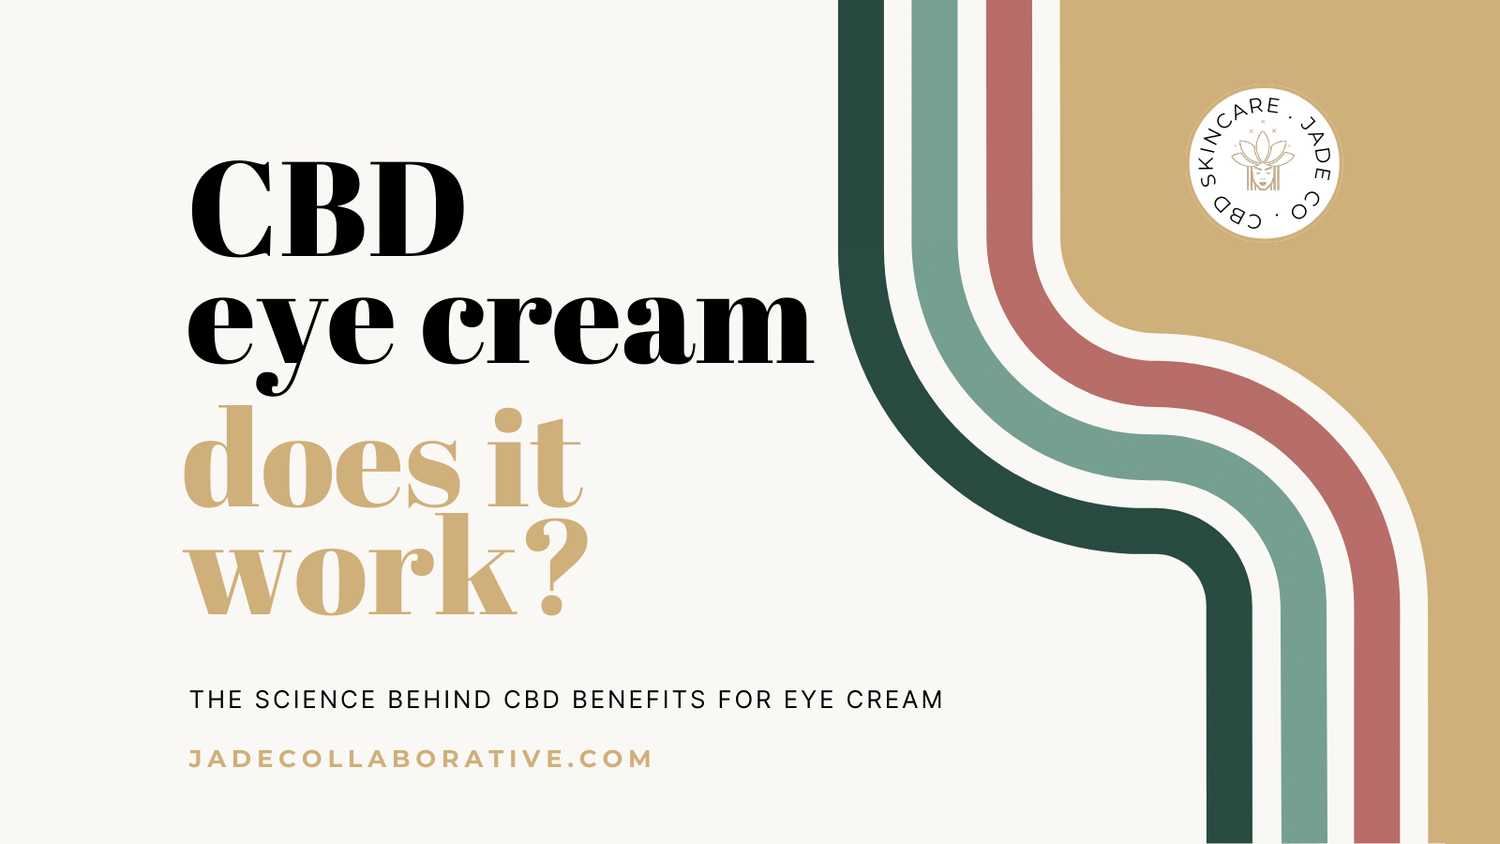 cbd eye cream - does it work? by jade collaborative